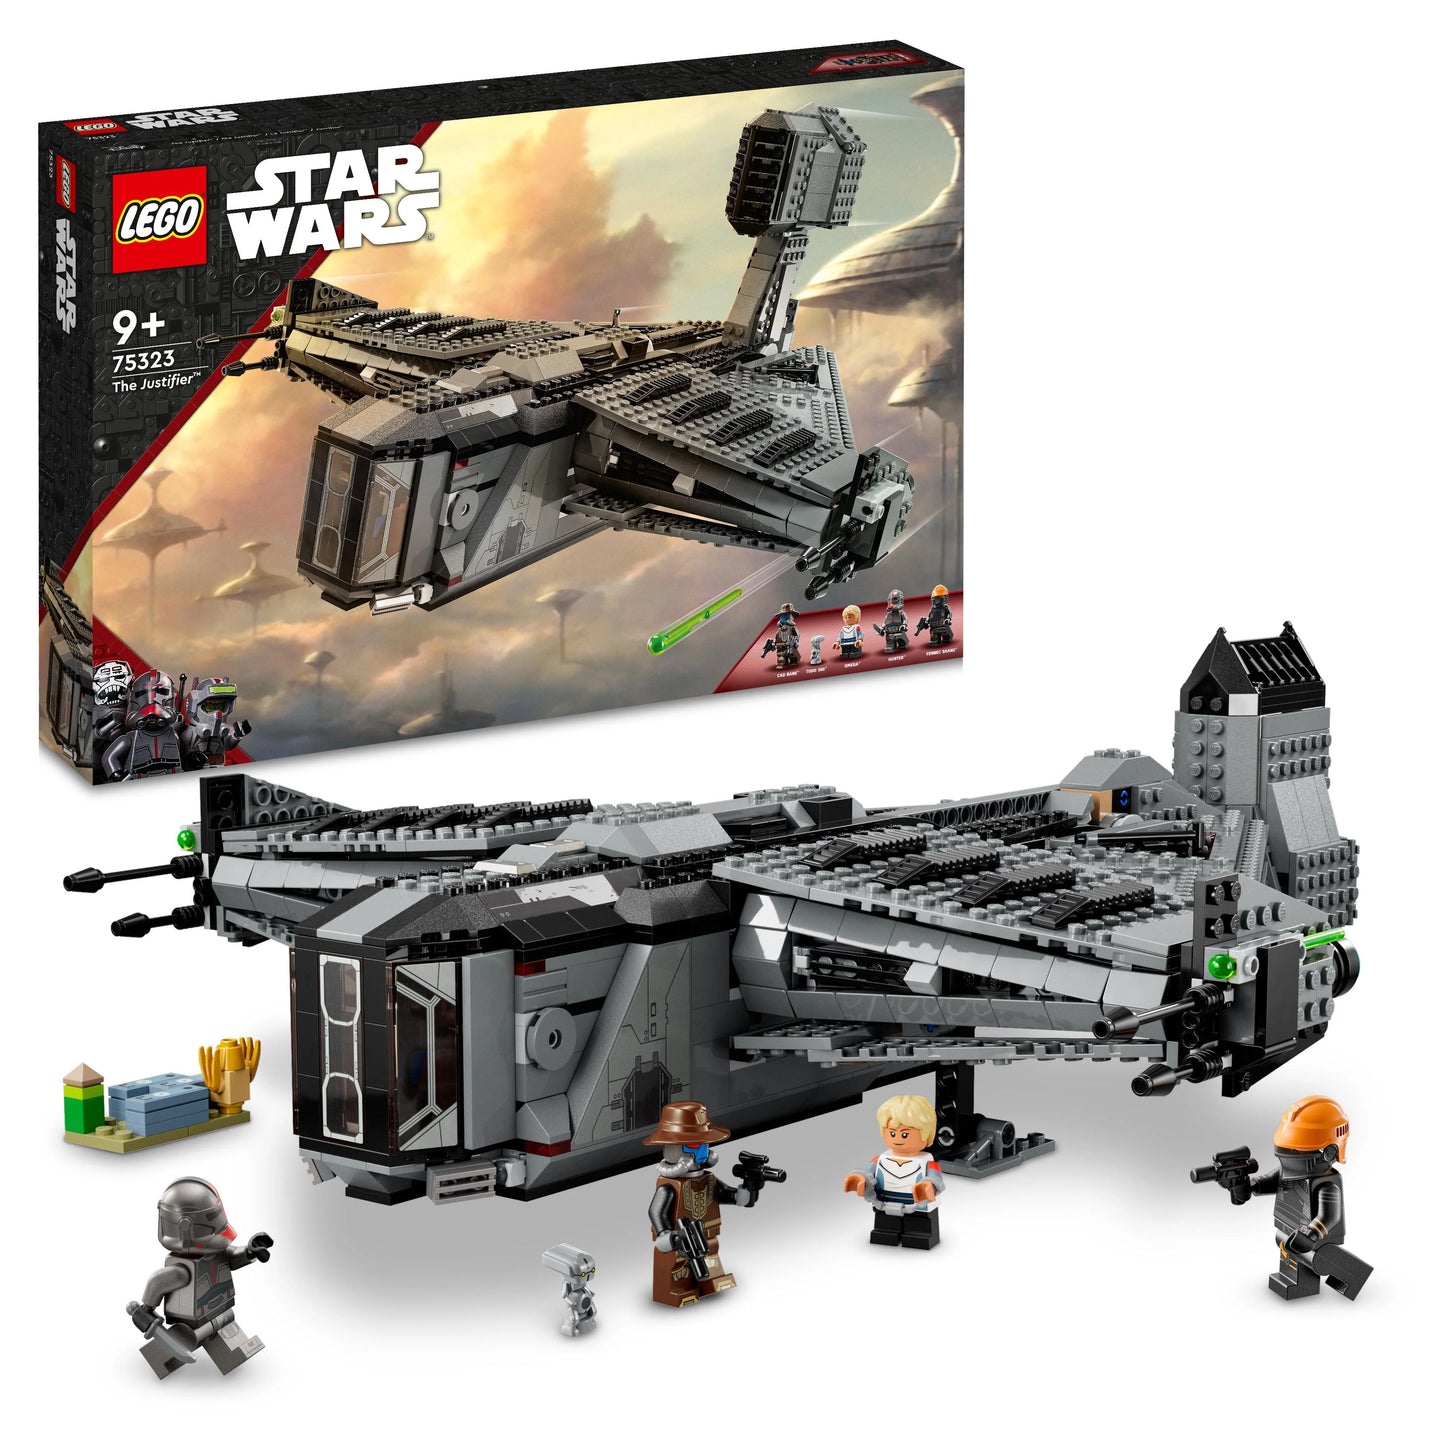 The Justifier - LEGO Star Wars